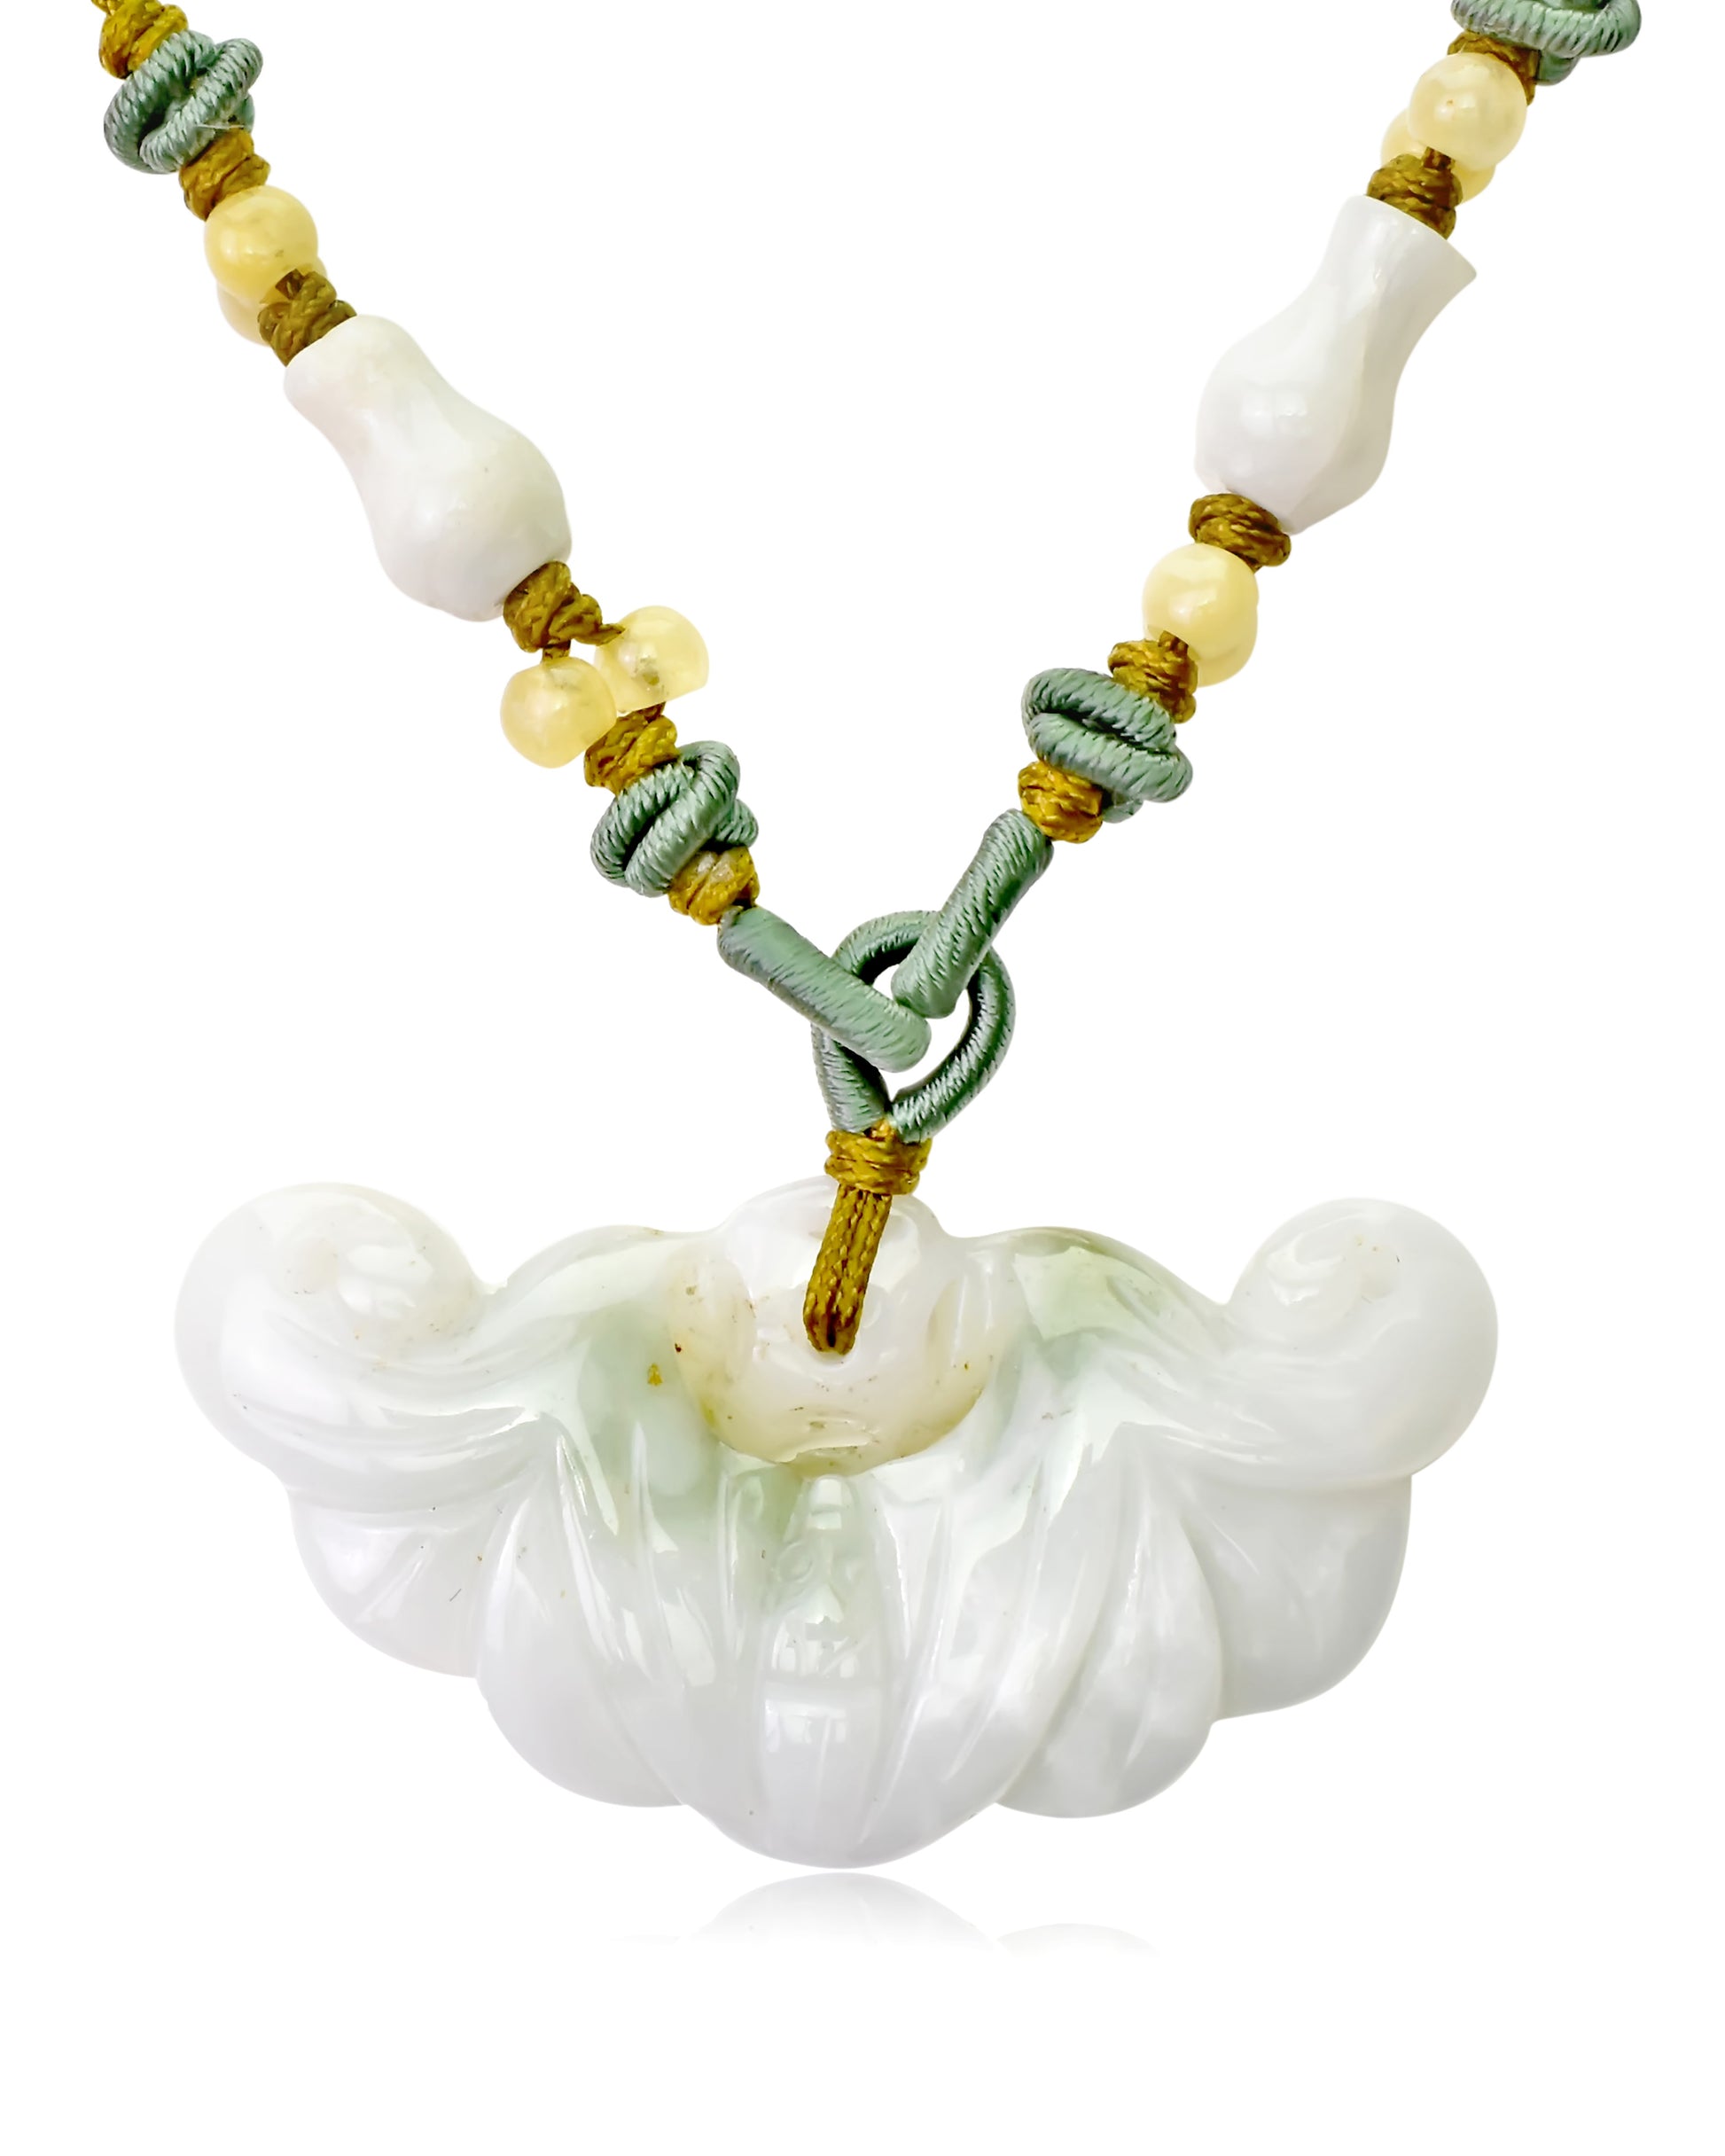 Attract Prosperity with Unimaginable Bat Jade Necklace